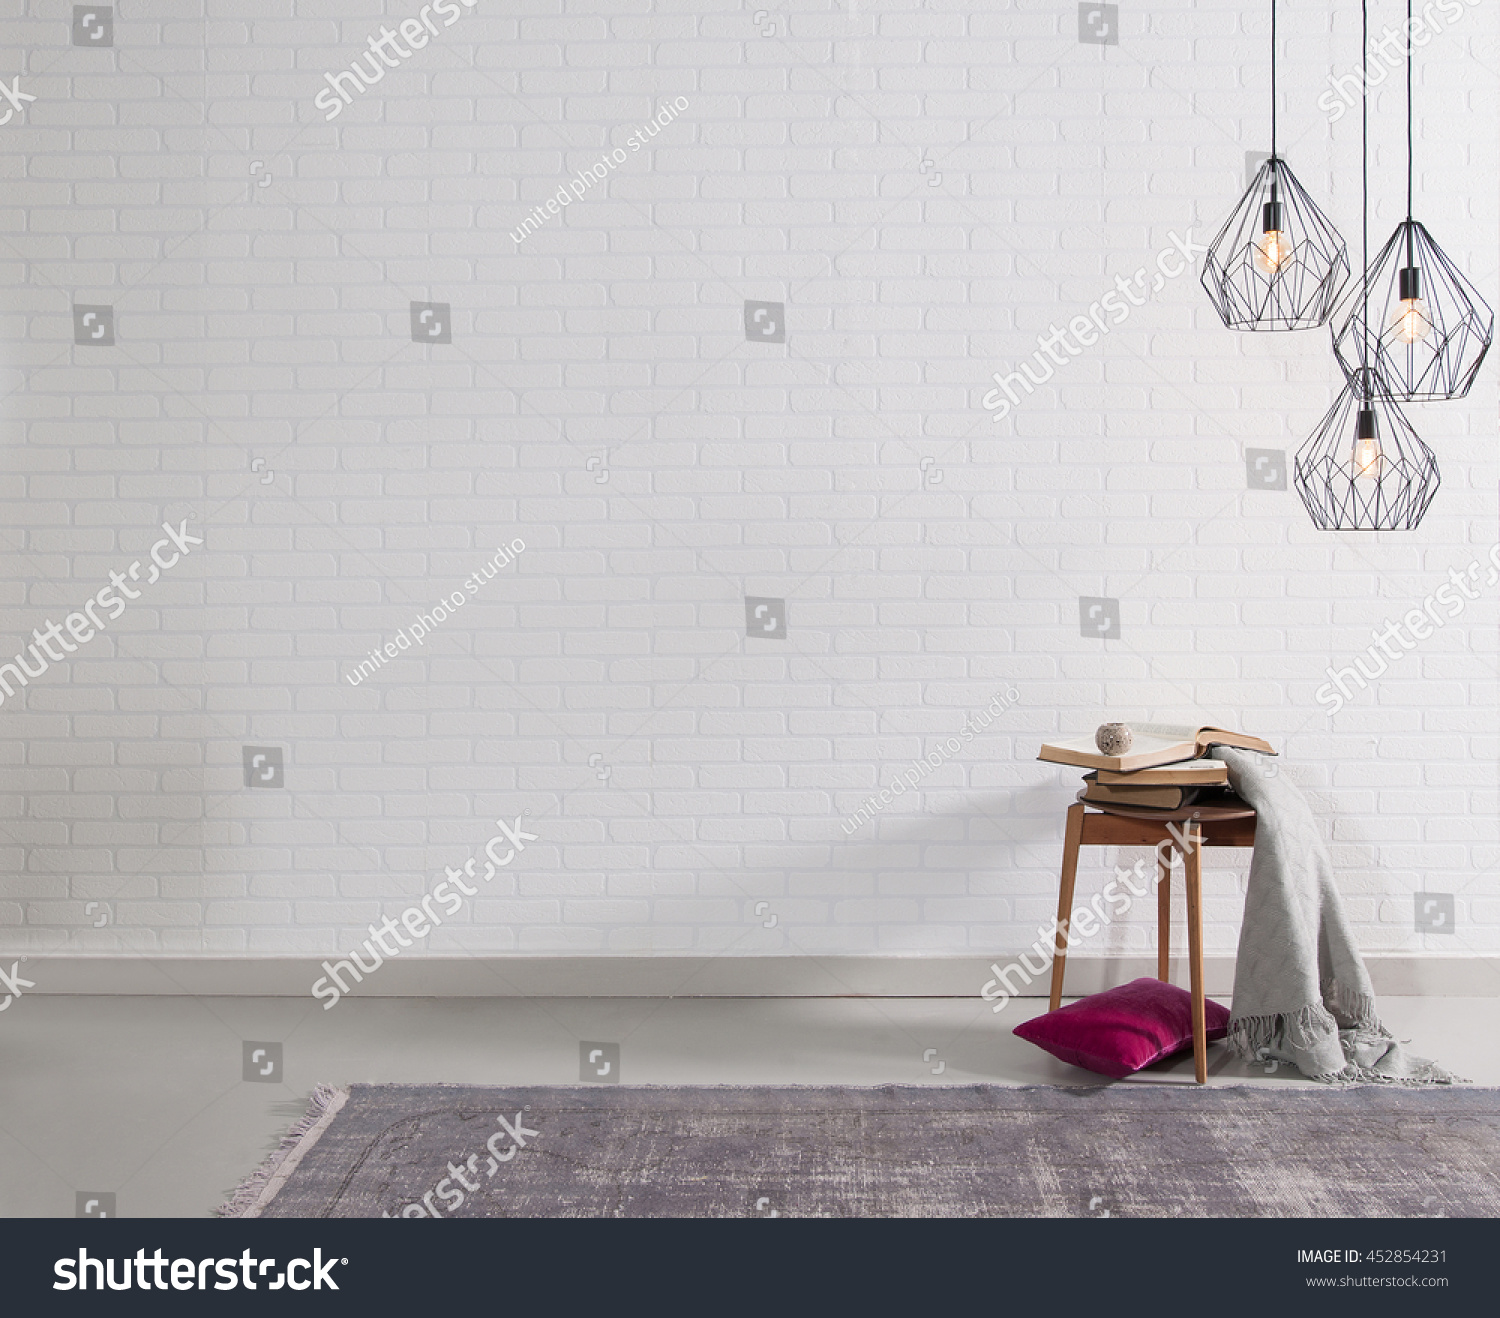 modern brick wall interior purple pillow and lamp decor #452854231